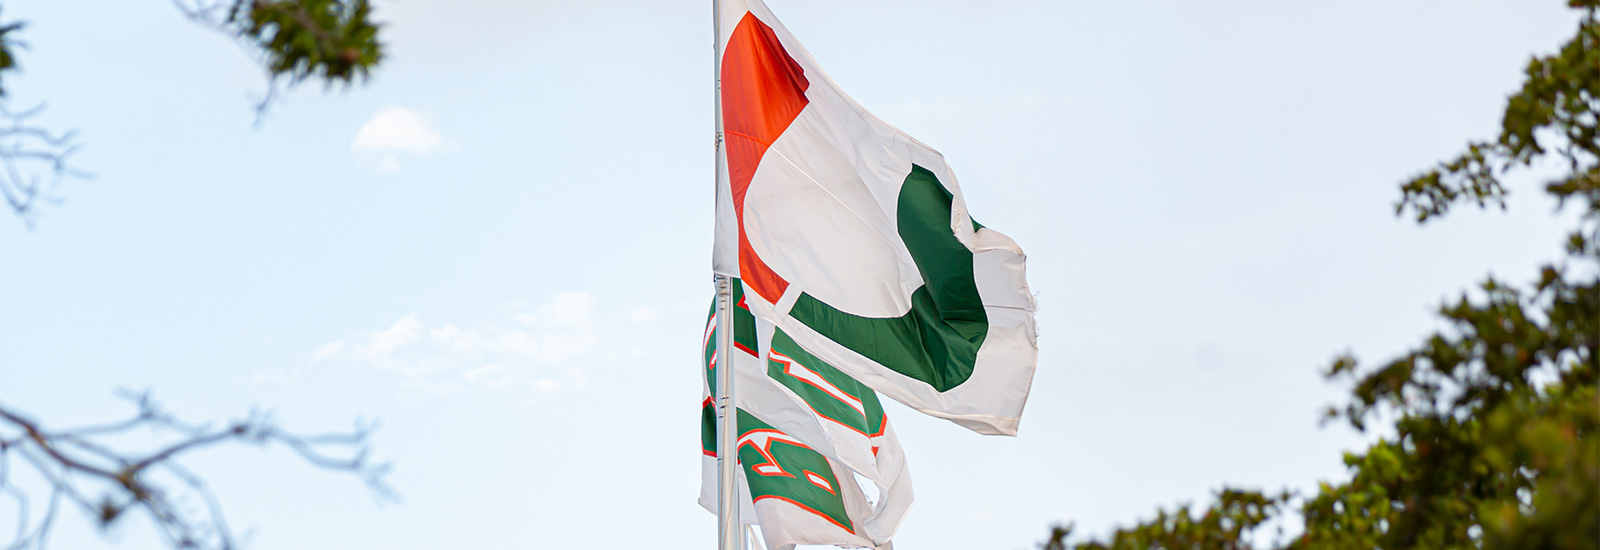 University of Miami flags on flag pole